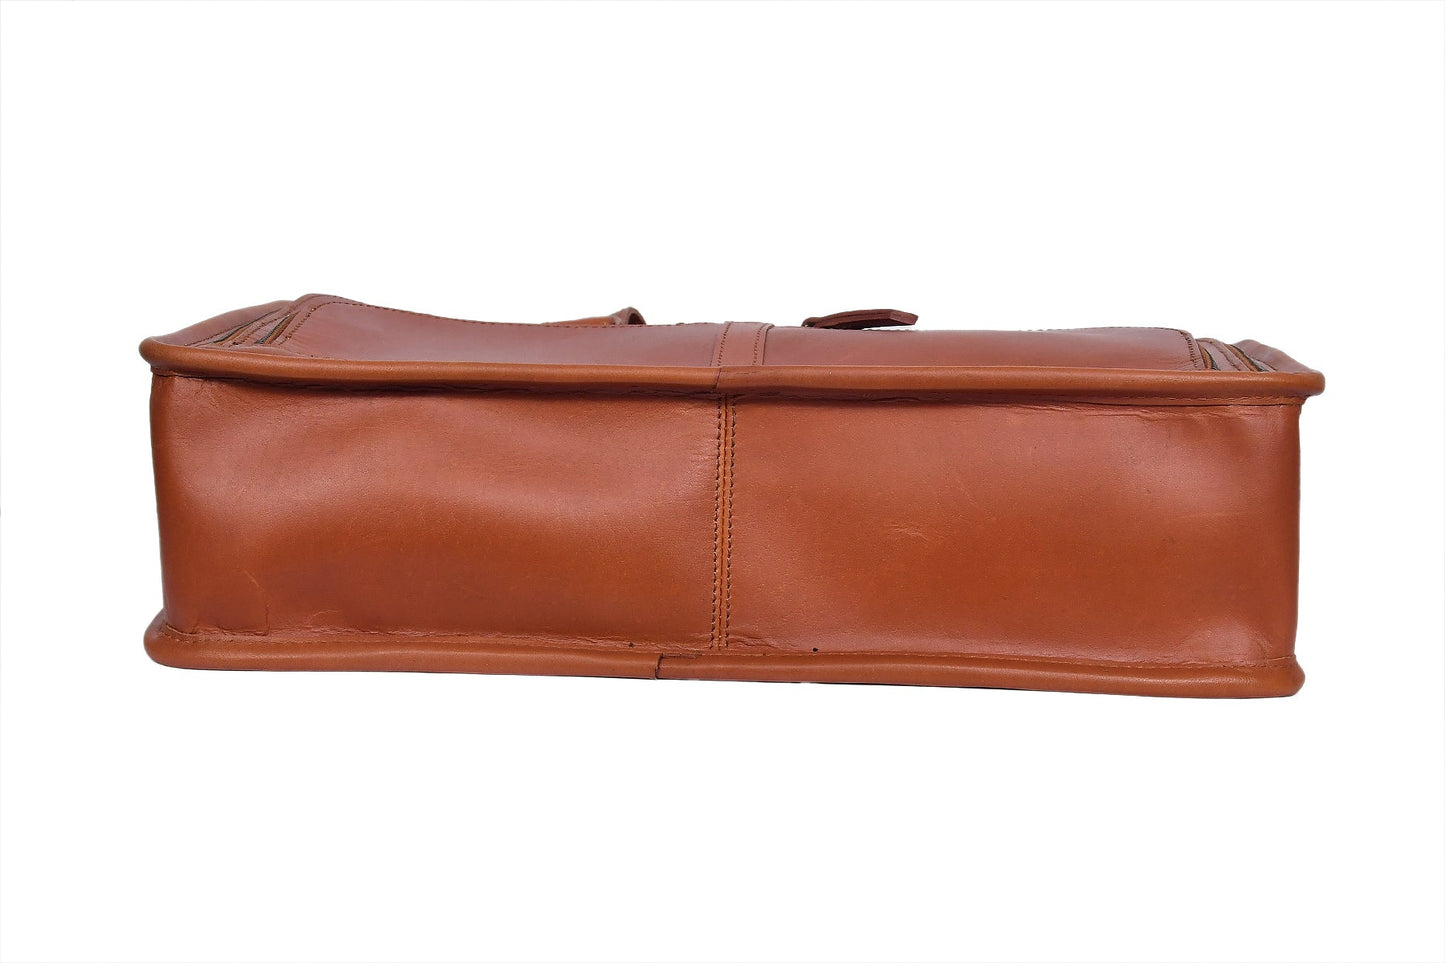 Stylish Tan Messenger Bag with Abundant Storage and Multiple Zip Compartments - CELTICINDIA